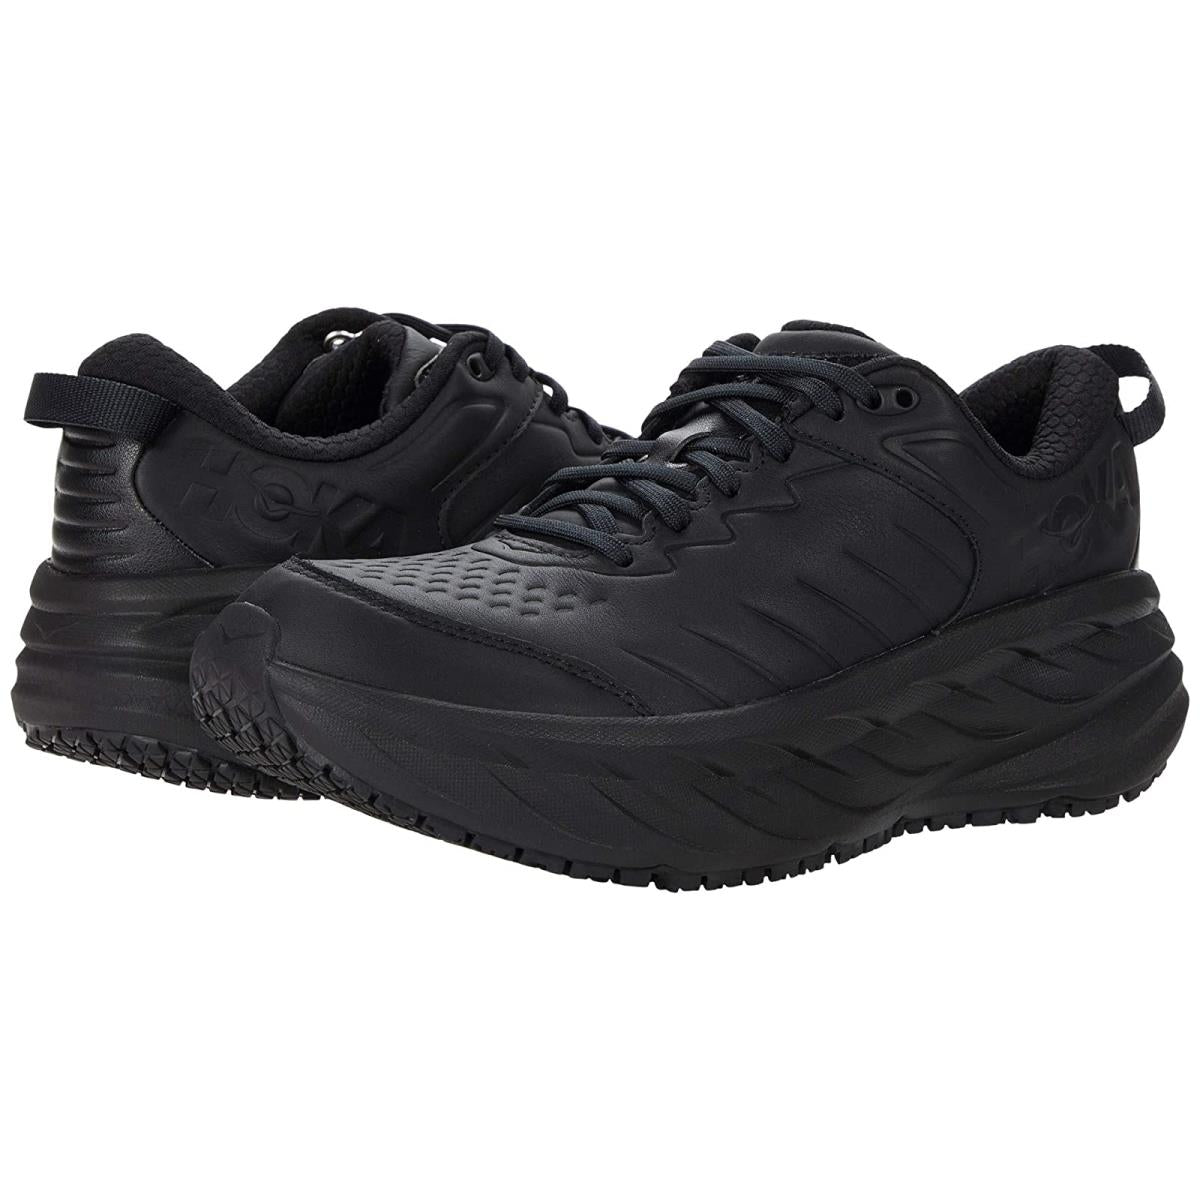 Hoka Bondi 8 Women's (Wide) Everyday Running Shoe - Black / Black - Size 11